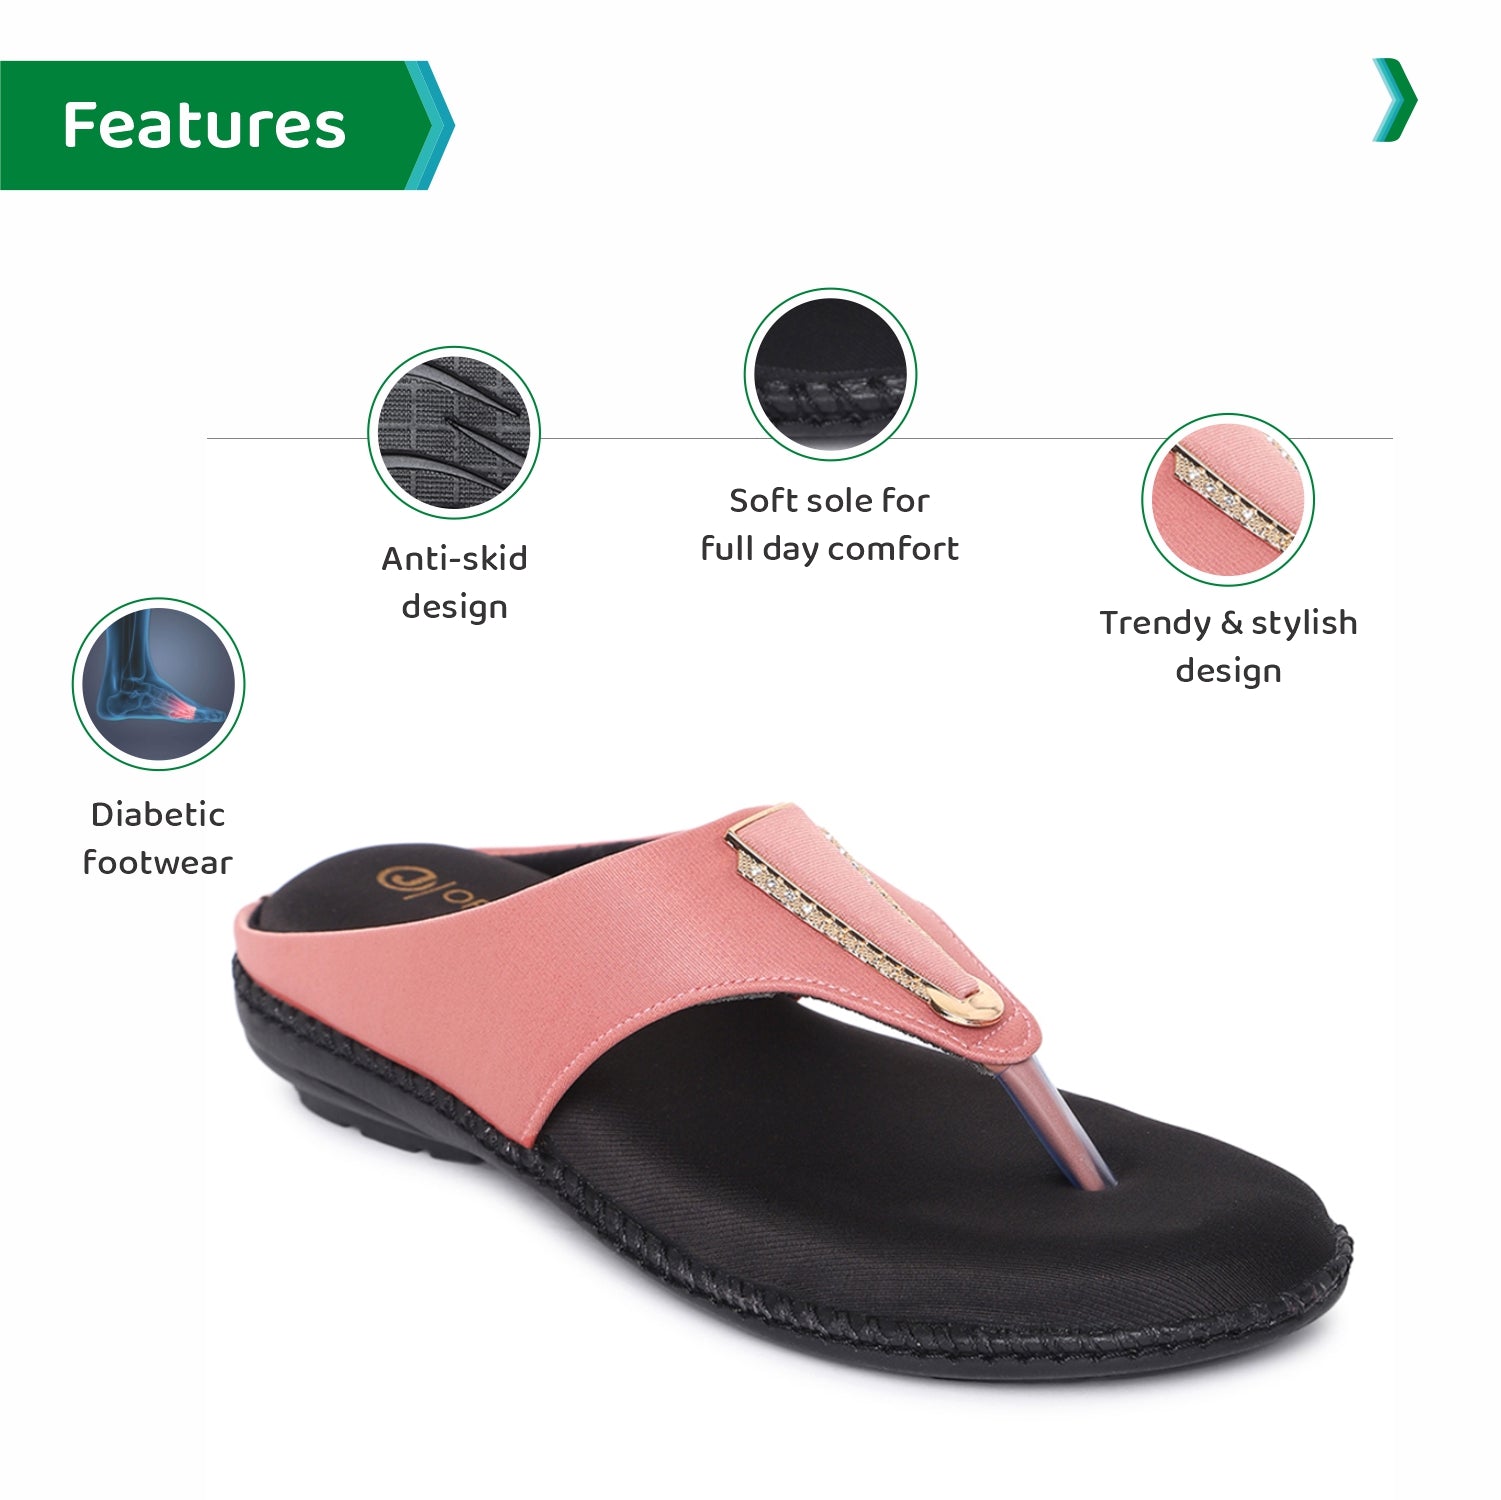 ORTHO JOY Fancy doctor slippers | Flat sandals